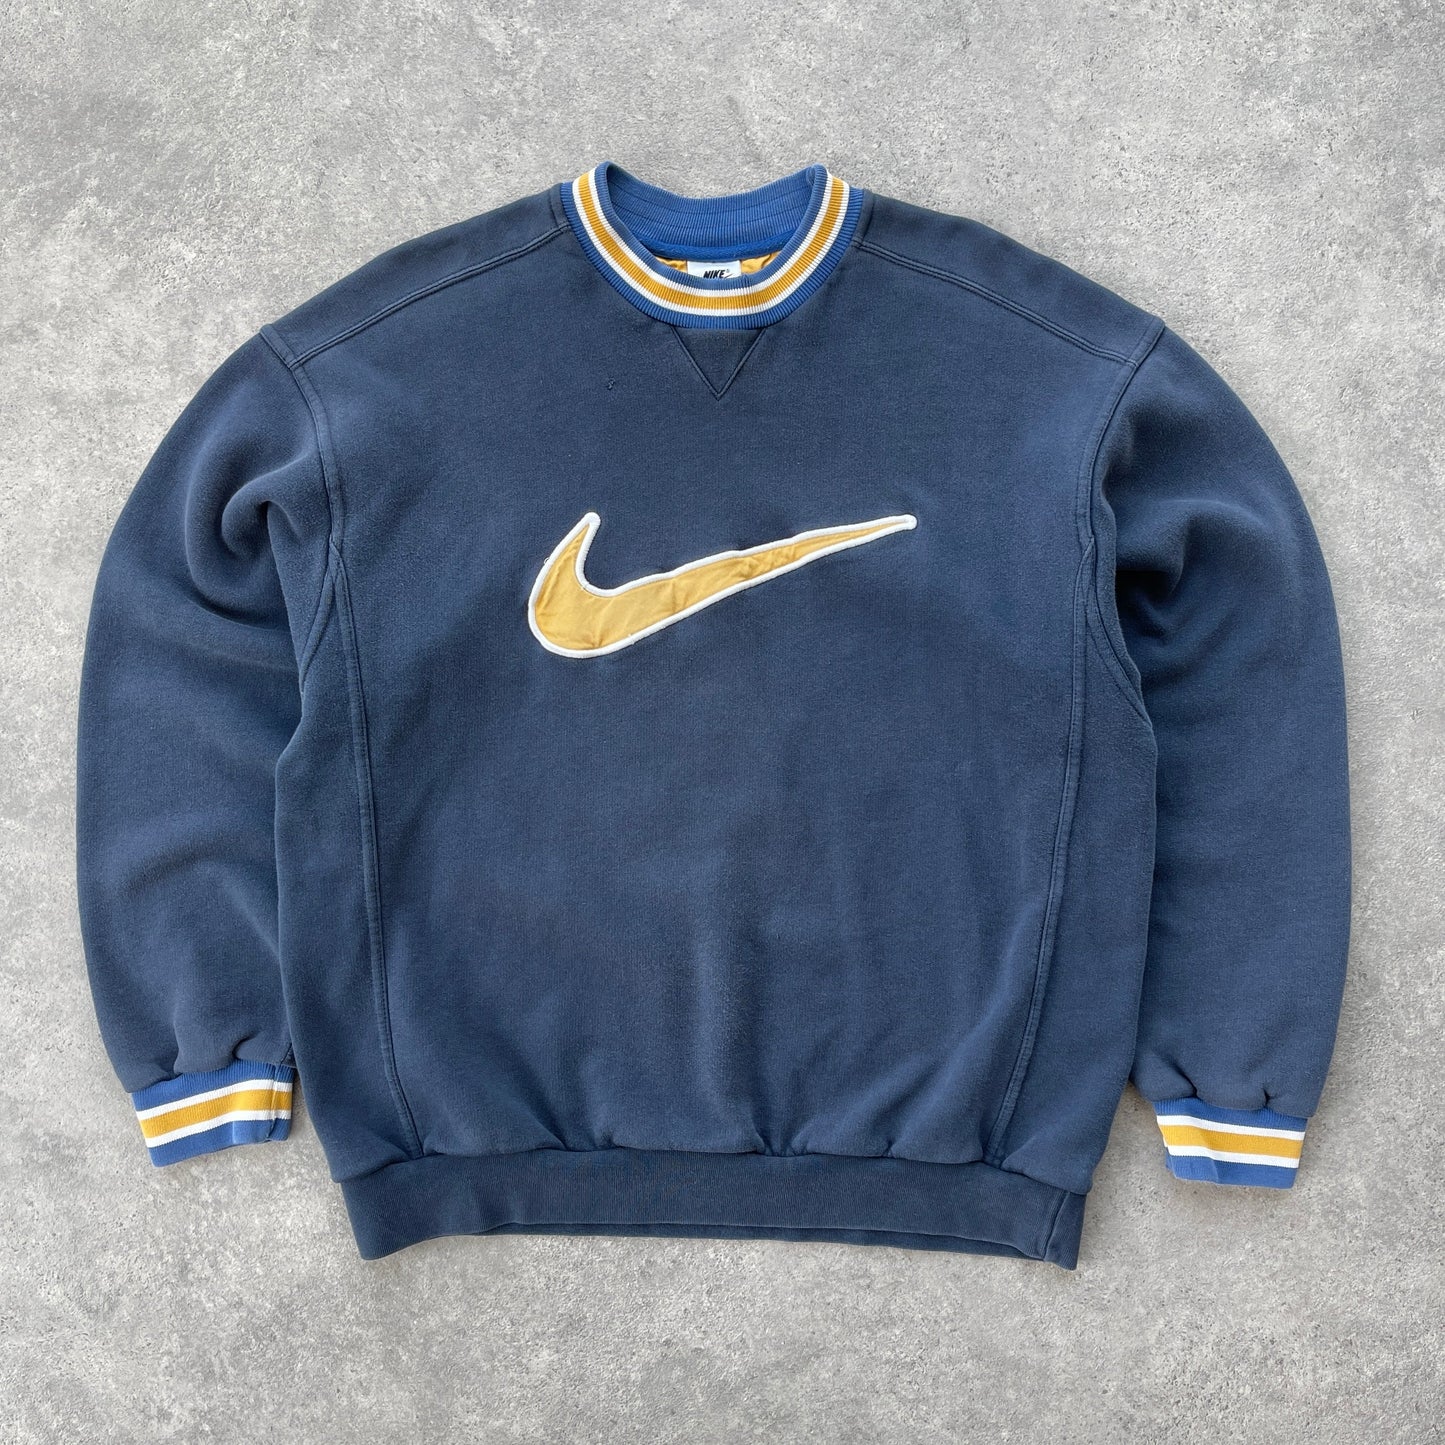 Nike RARE 1990s heavyweight embroidered sweatshirt (M)